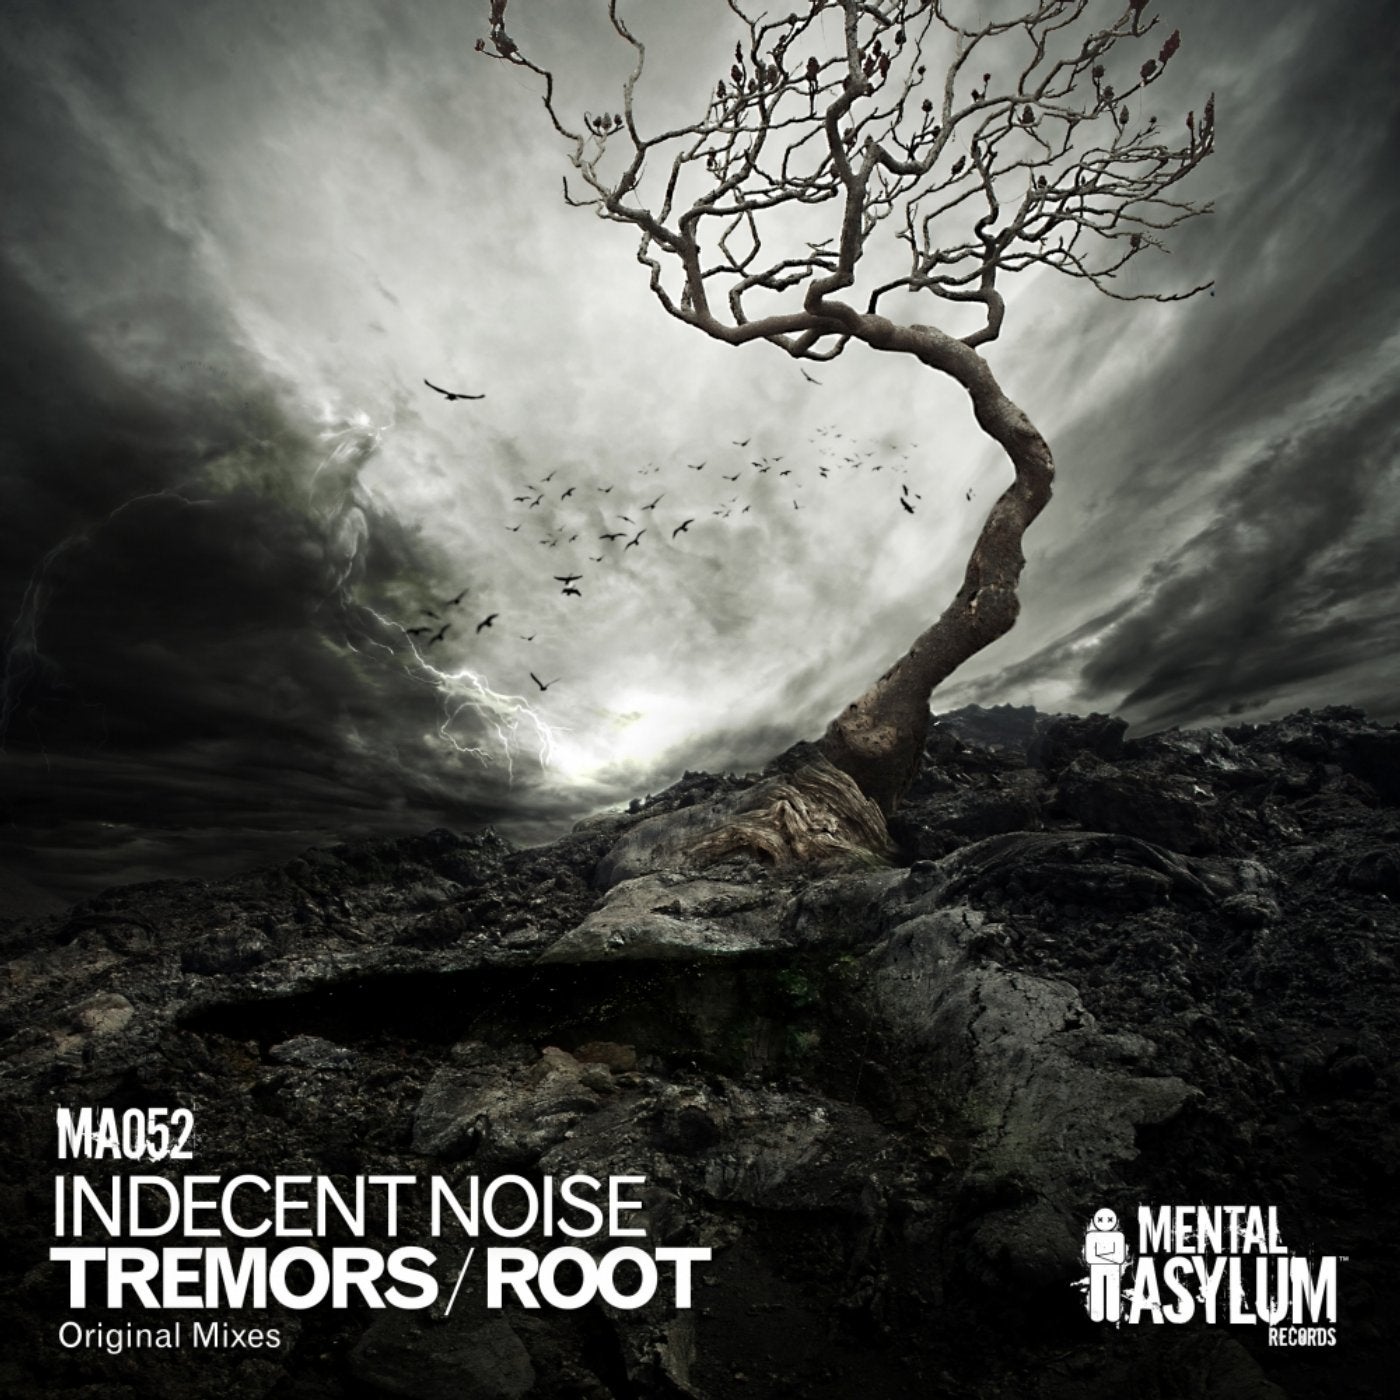 Tremors / Root